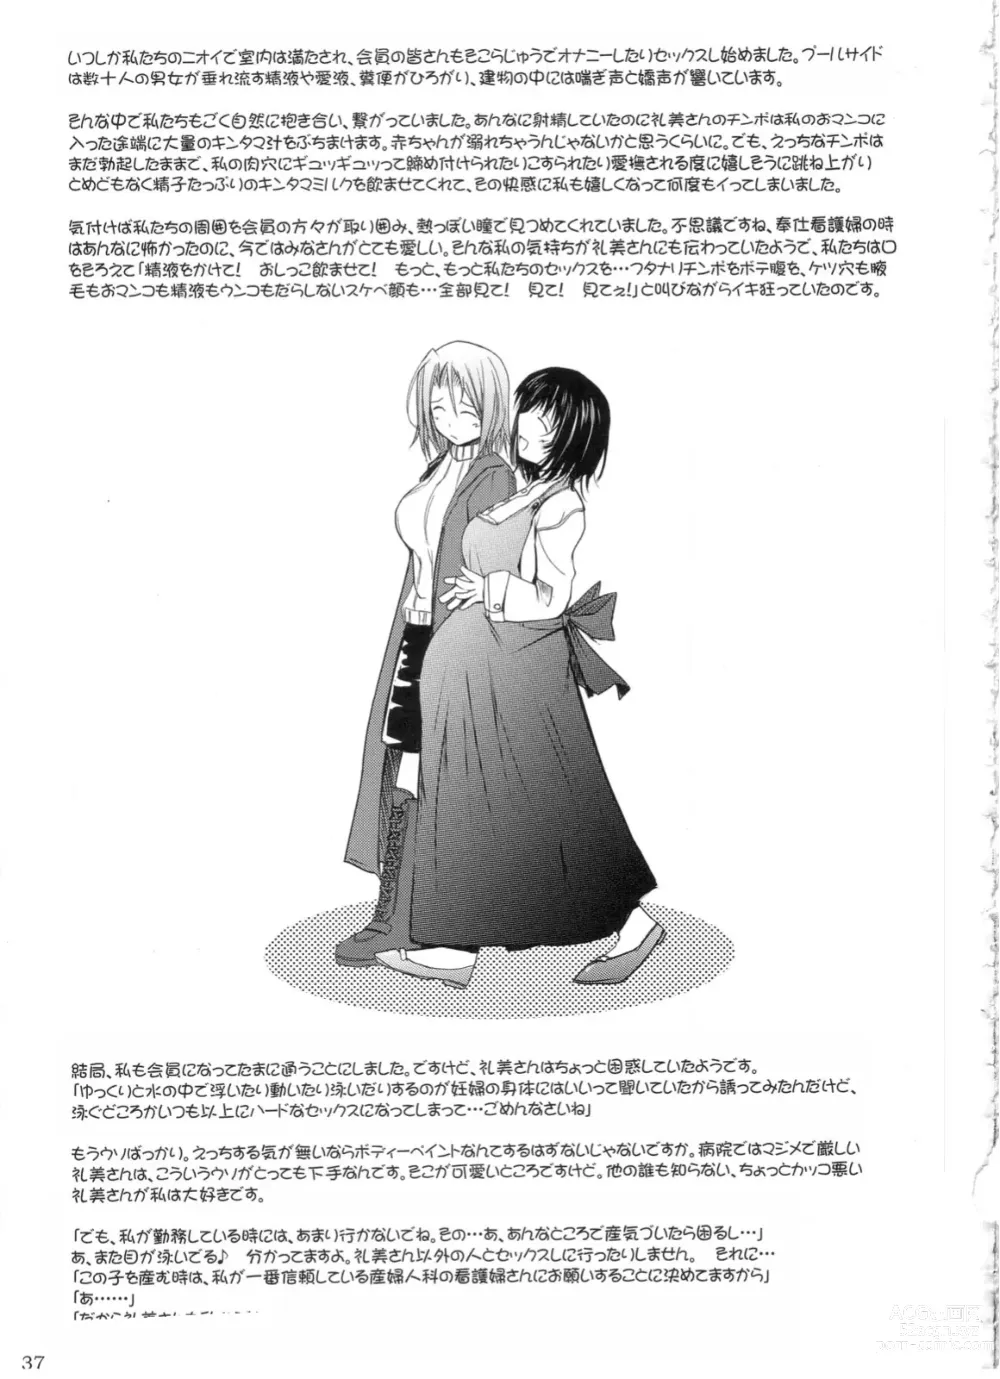 Page 36 of doujinshi Otome Byoutou